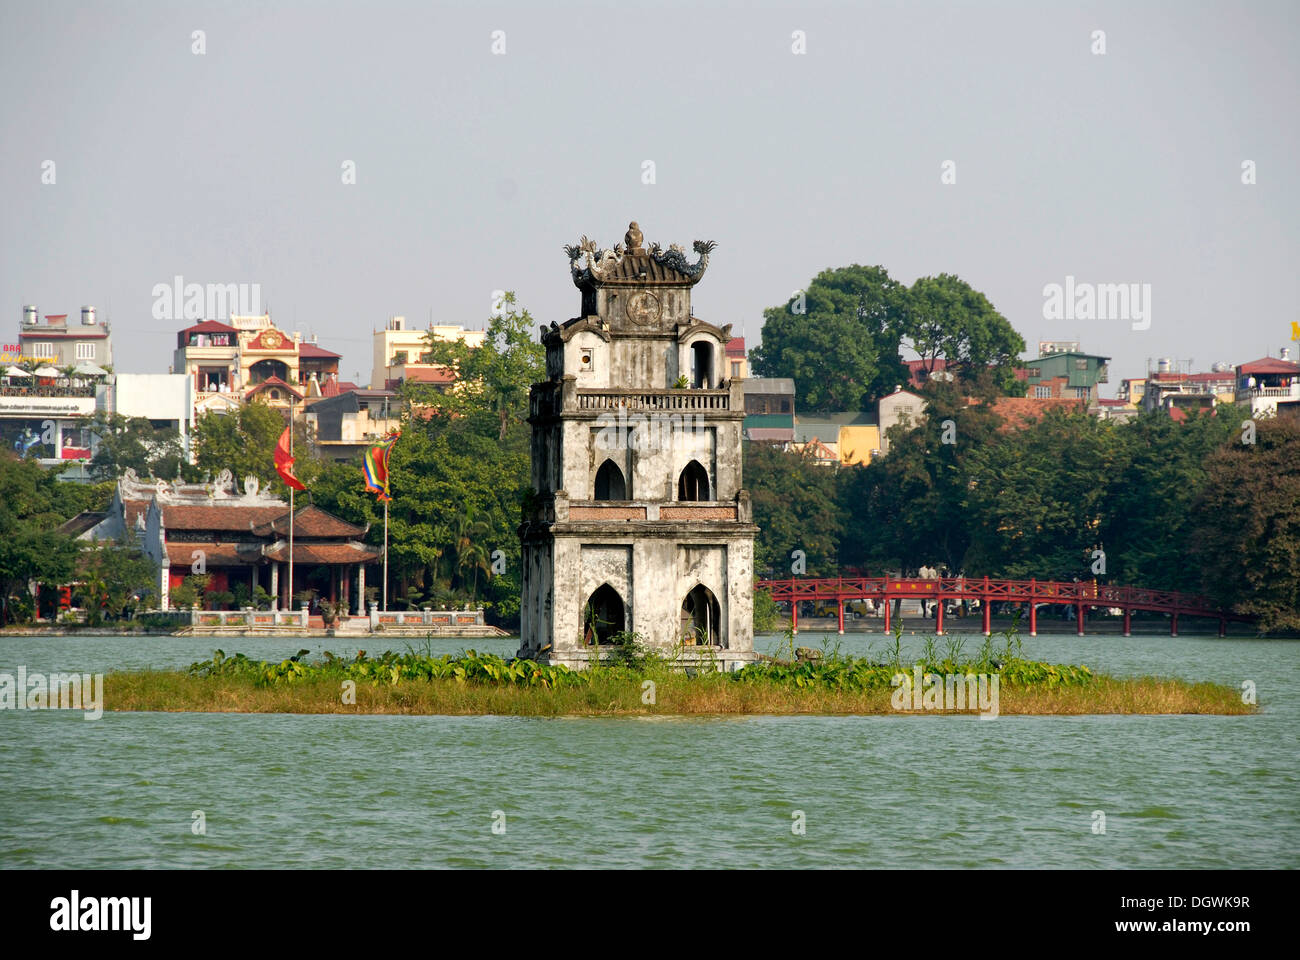 Thap Rua Turtle Tower, red The-Huc-Bridge, Ngoc Son Jade Mountain Temple, Hoan Kiem Lake, old town of Hanoi, Vietnam Stock Photo